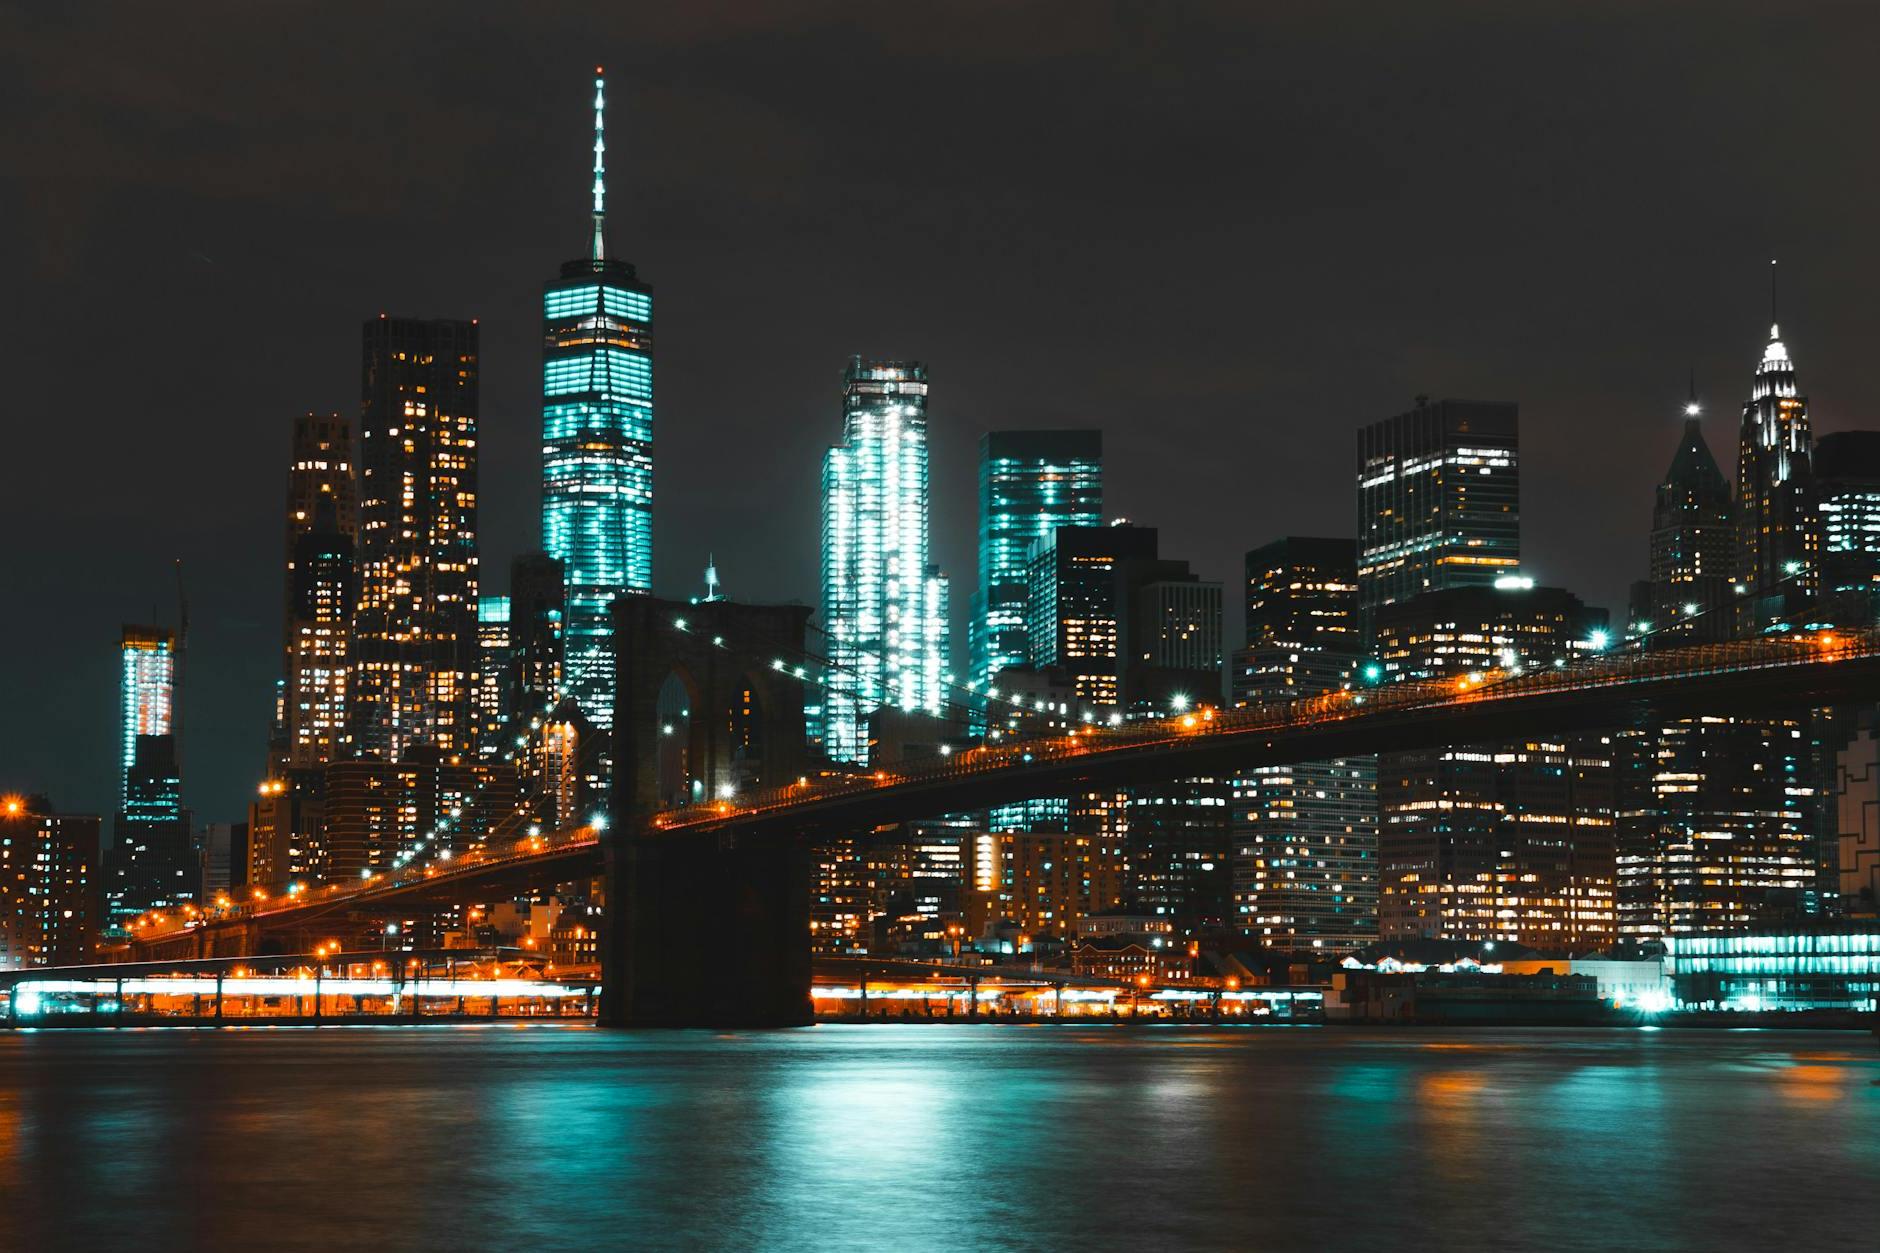 Lighted Brooklyn Bridge during Nighttime